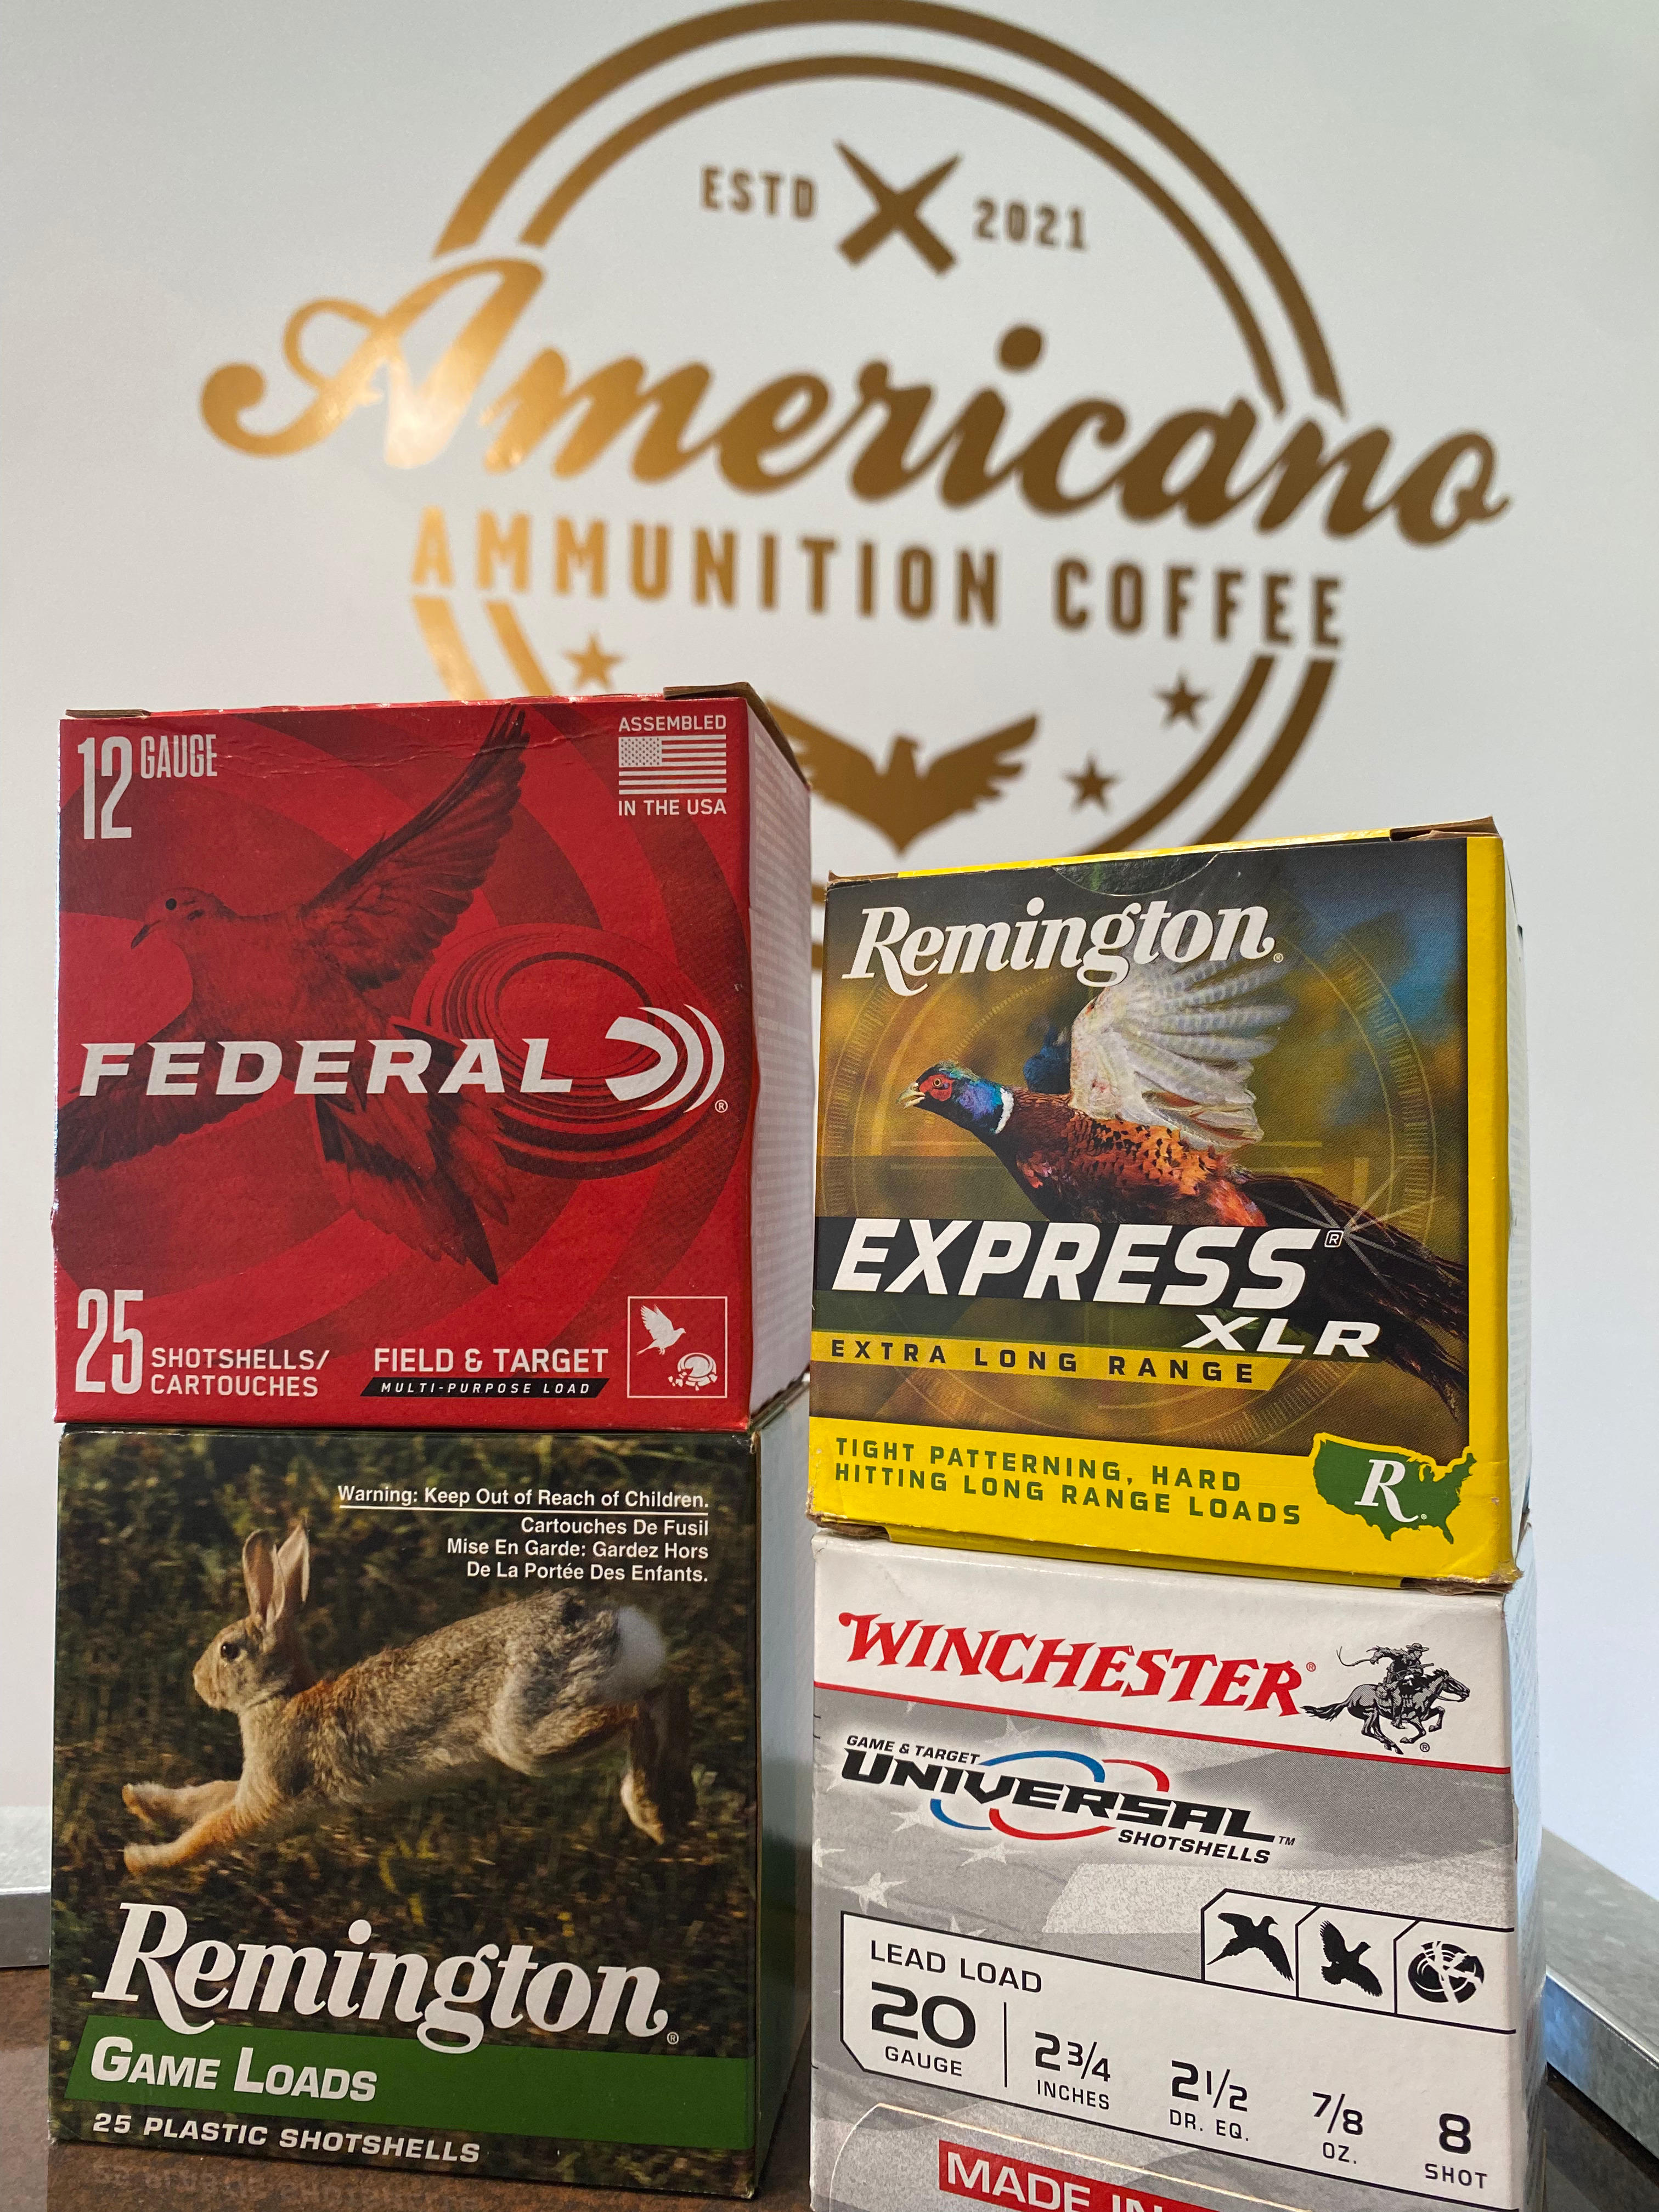 Image 14 | Americano Ammunition Coffee